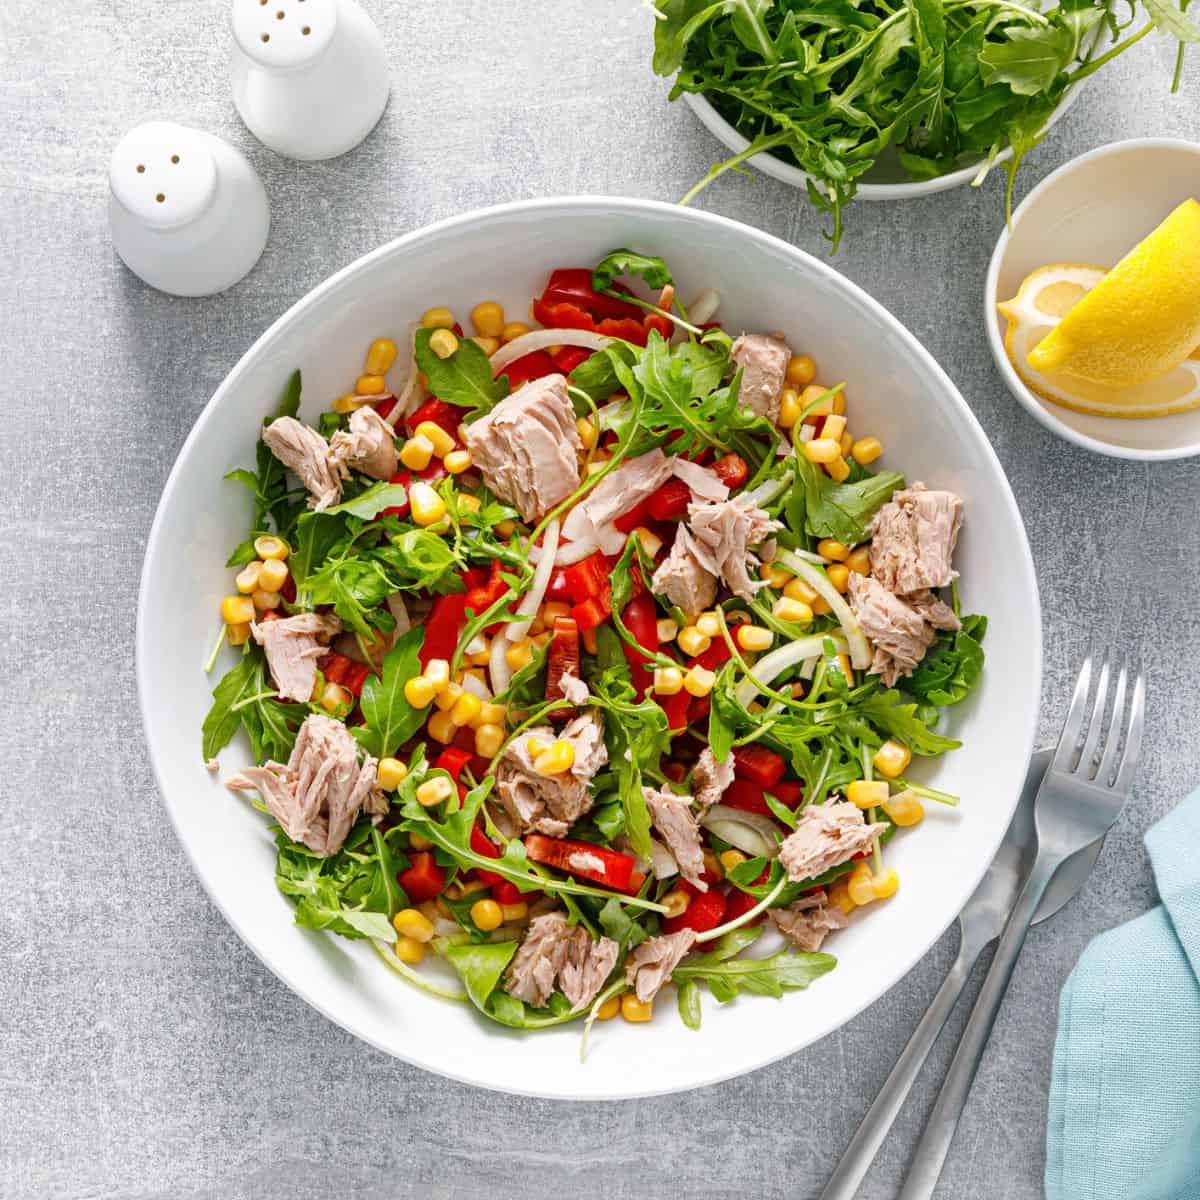 Healthy salad made with tuna arugula and fresh vegetables.